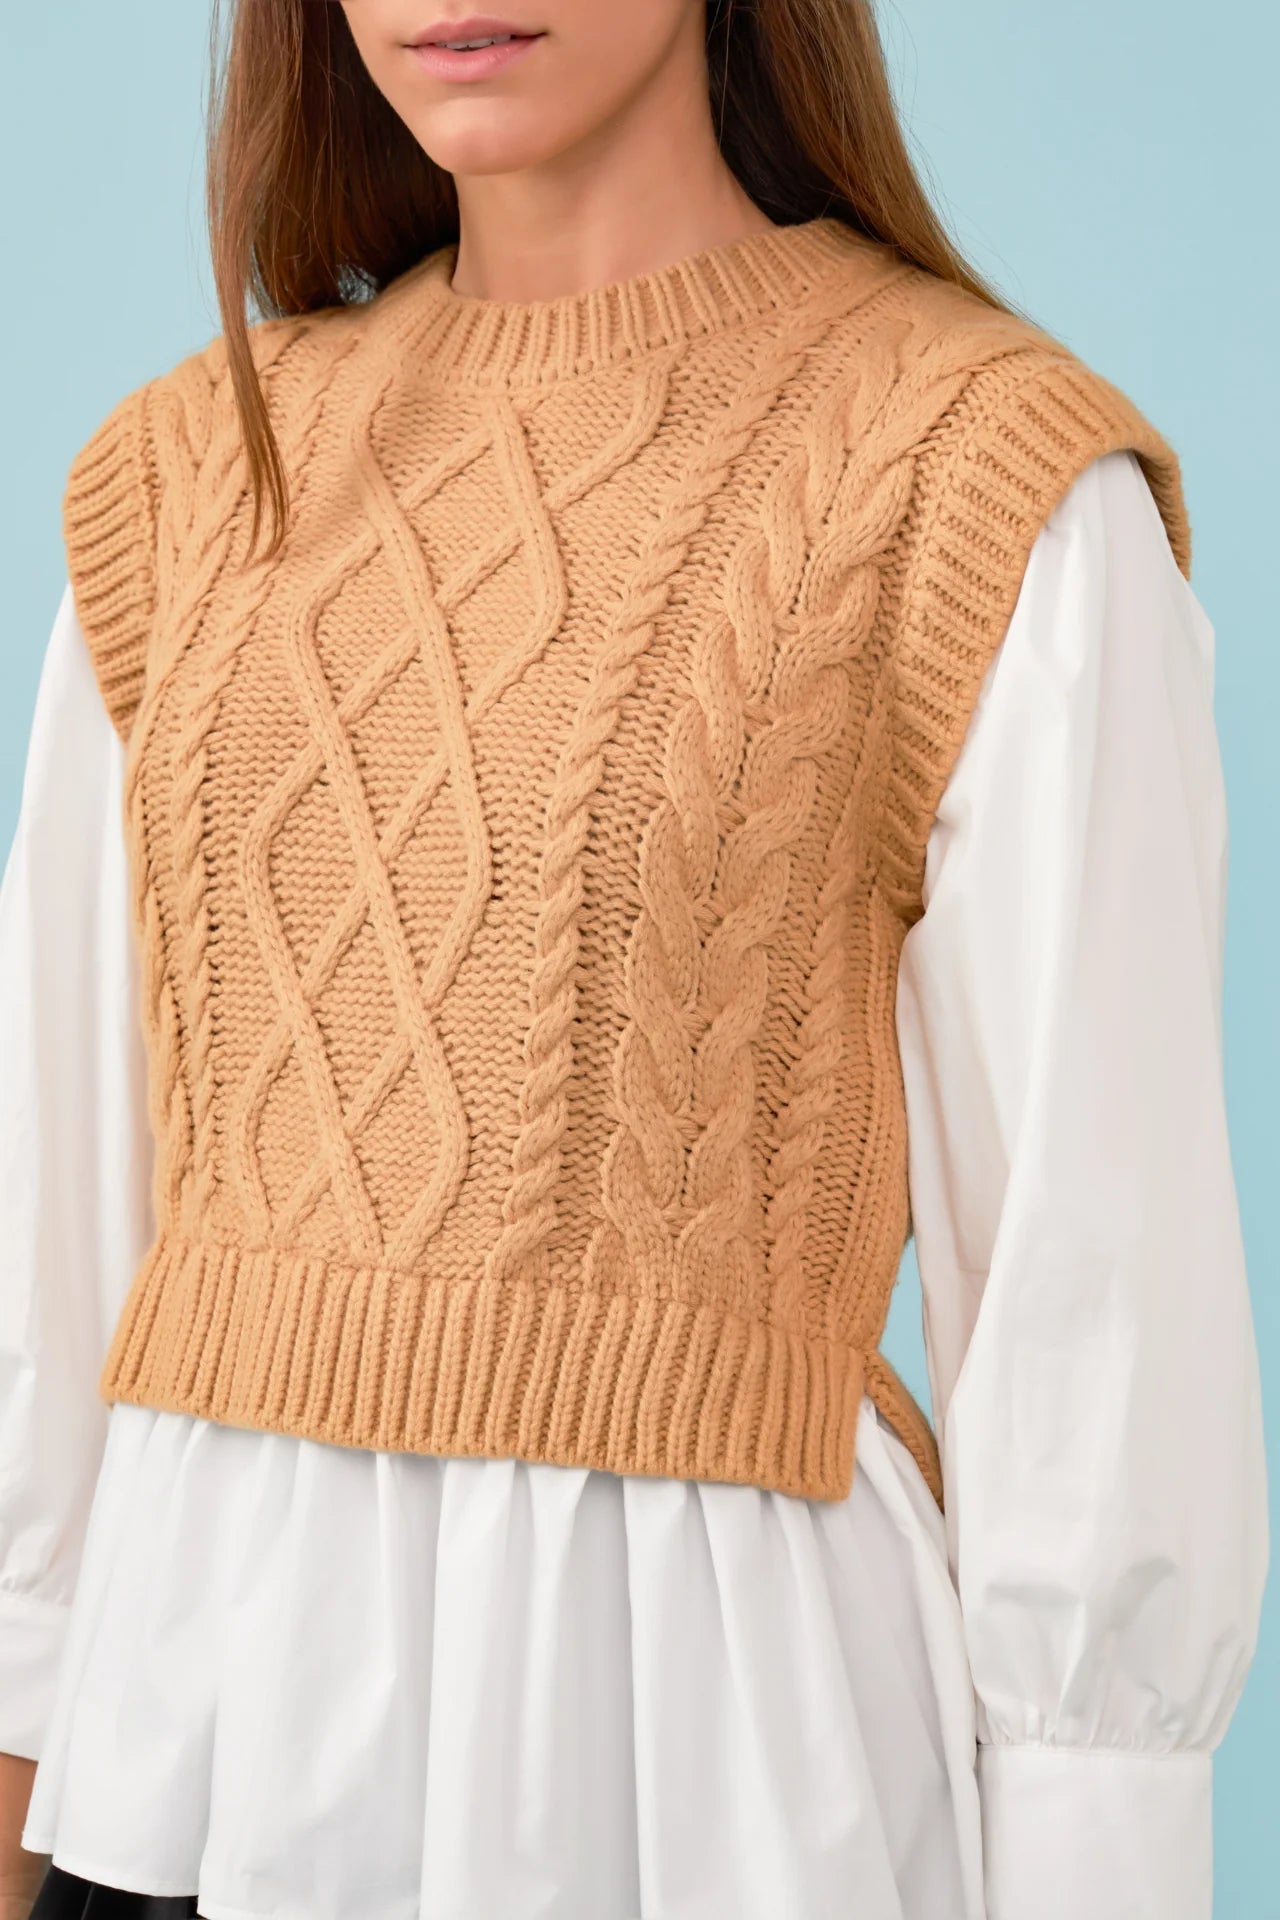 Tan Cable Knit Sweater - Lush Lemon - Women's Clothing - English Factory - 11503